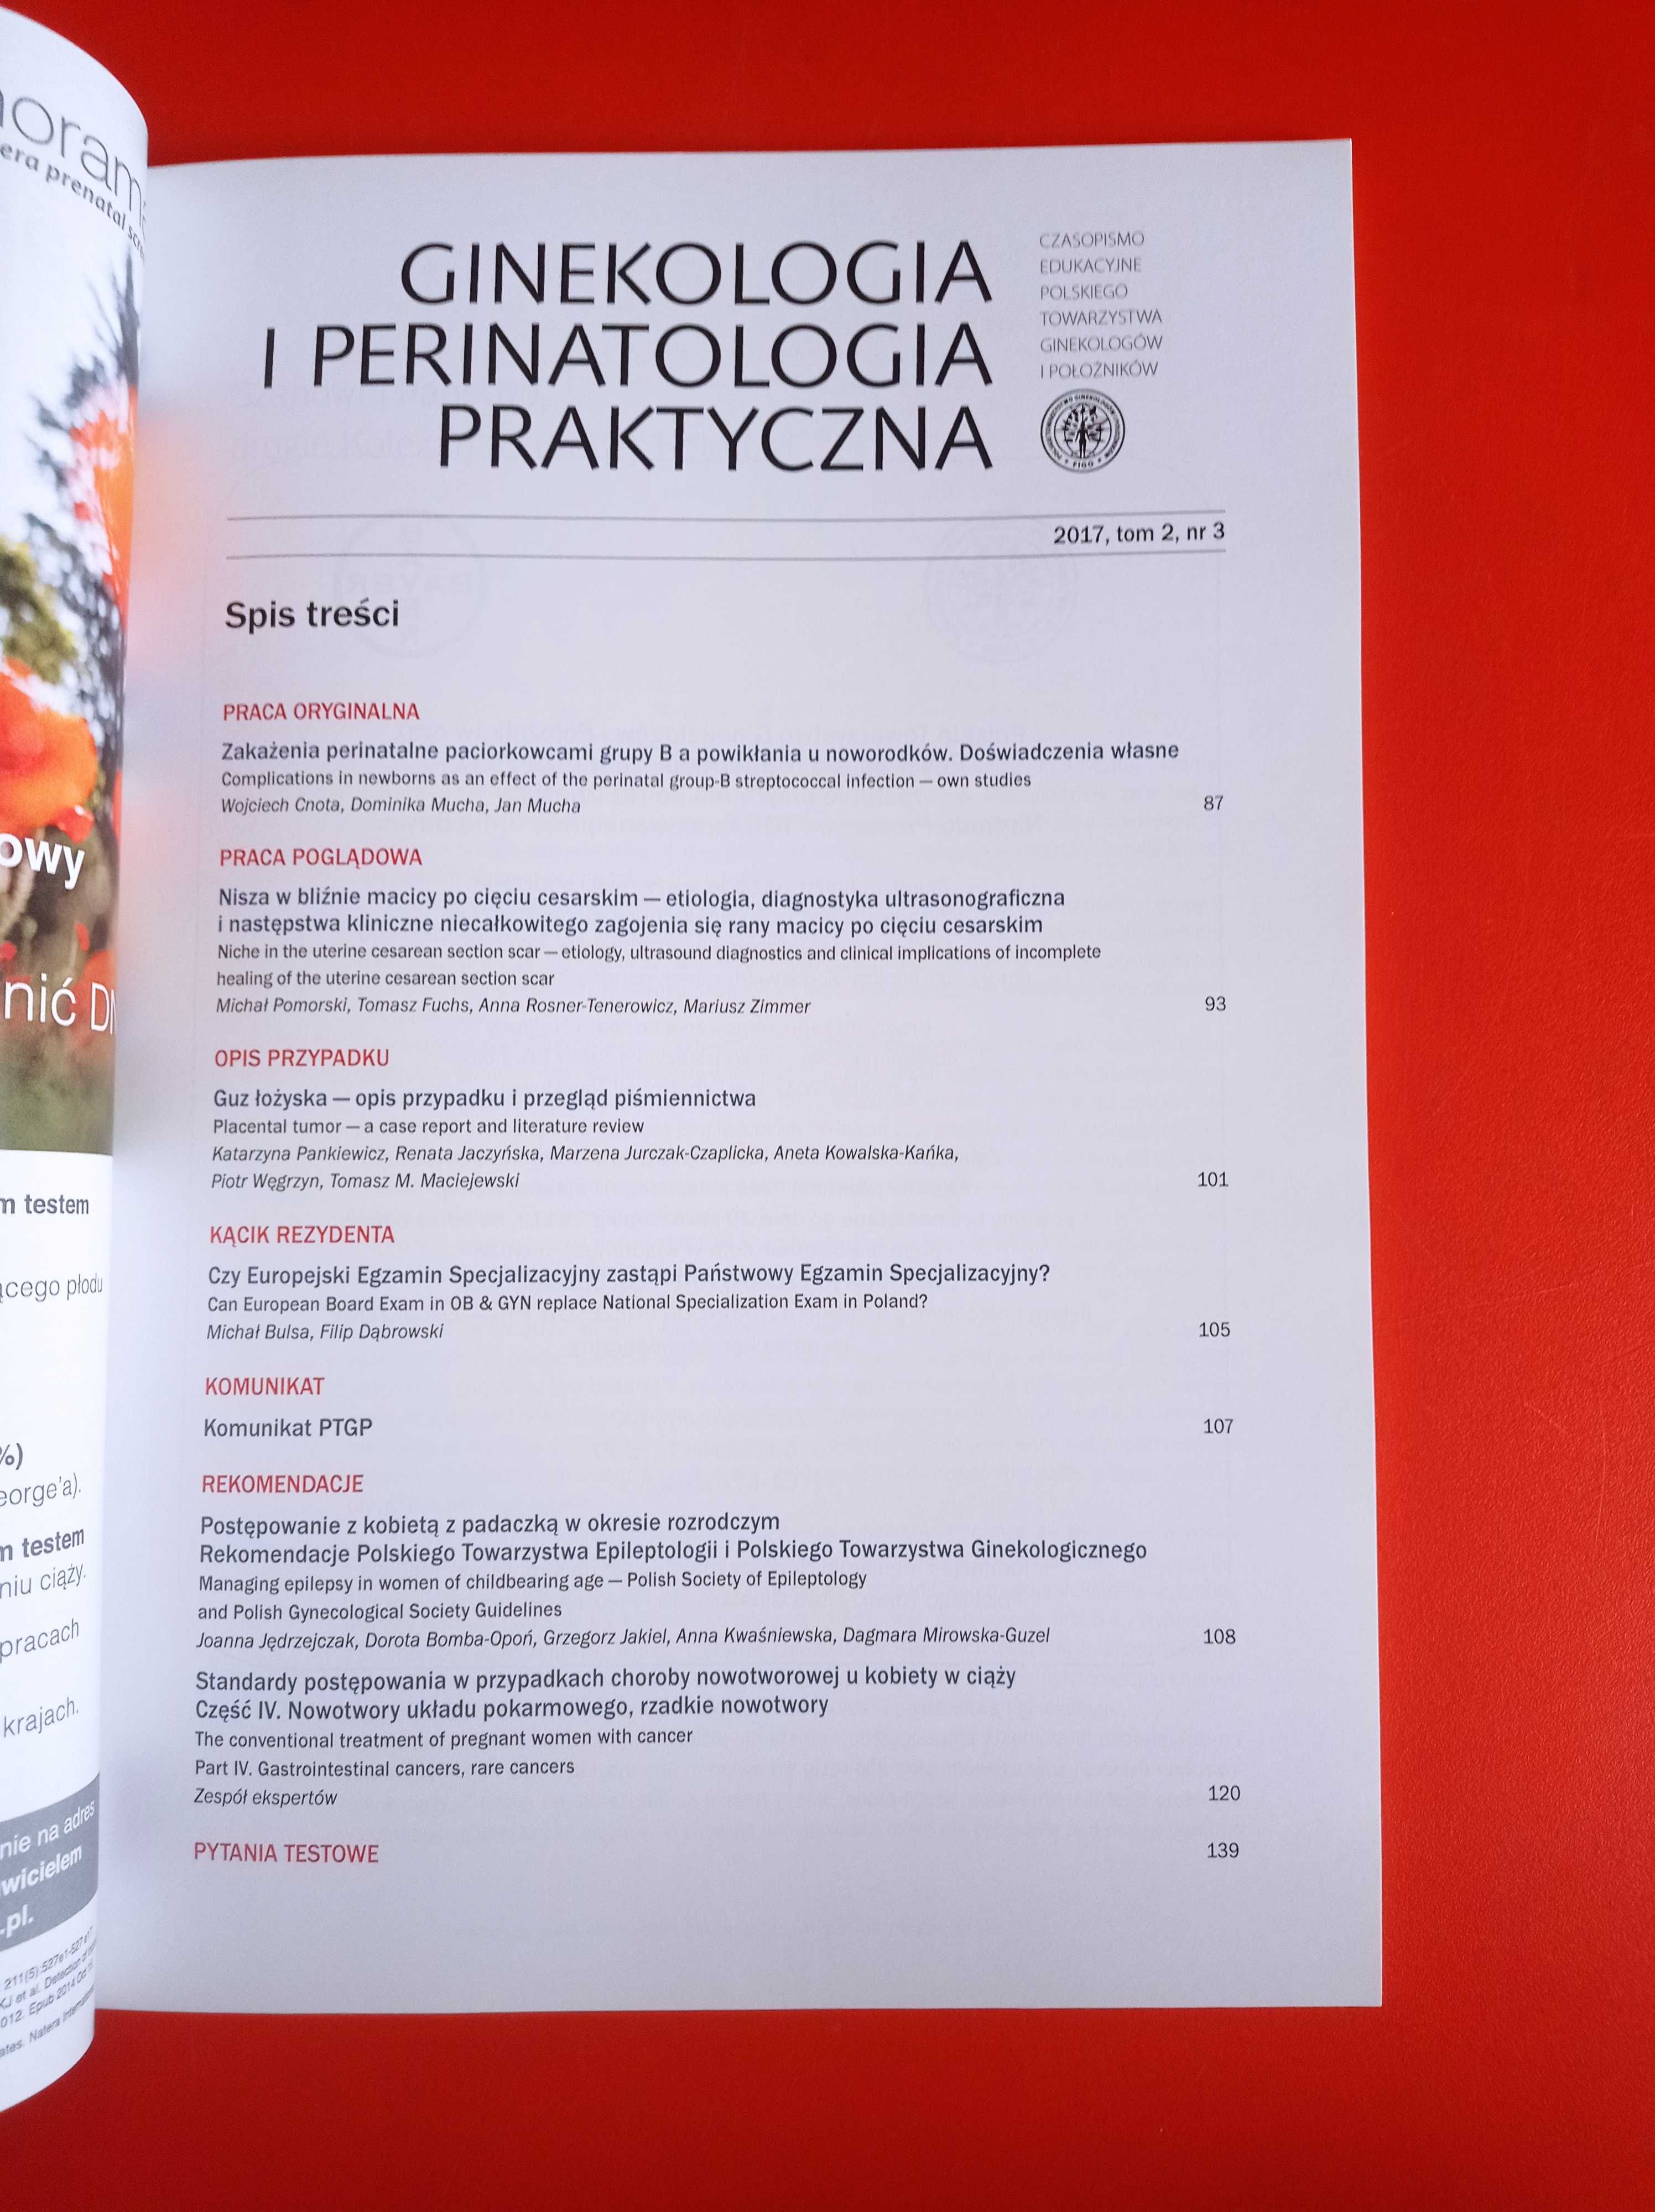 Ginekologia i perinatologia praktyczna, nr 3, tom 2, 2017